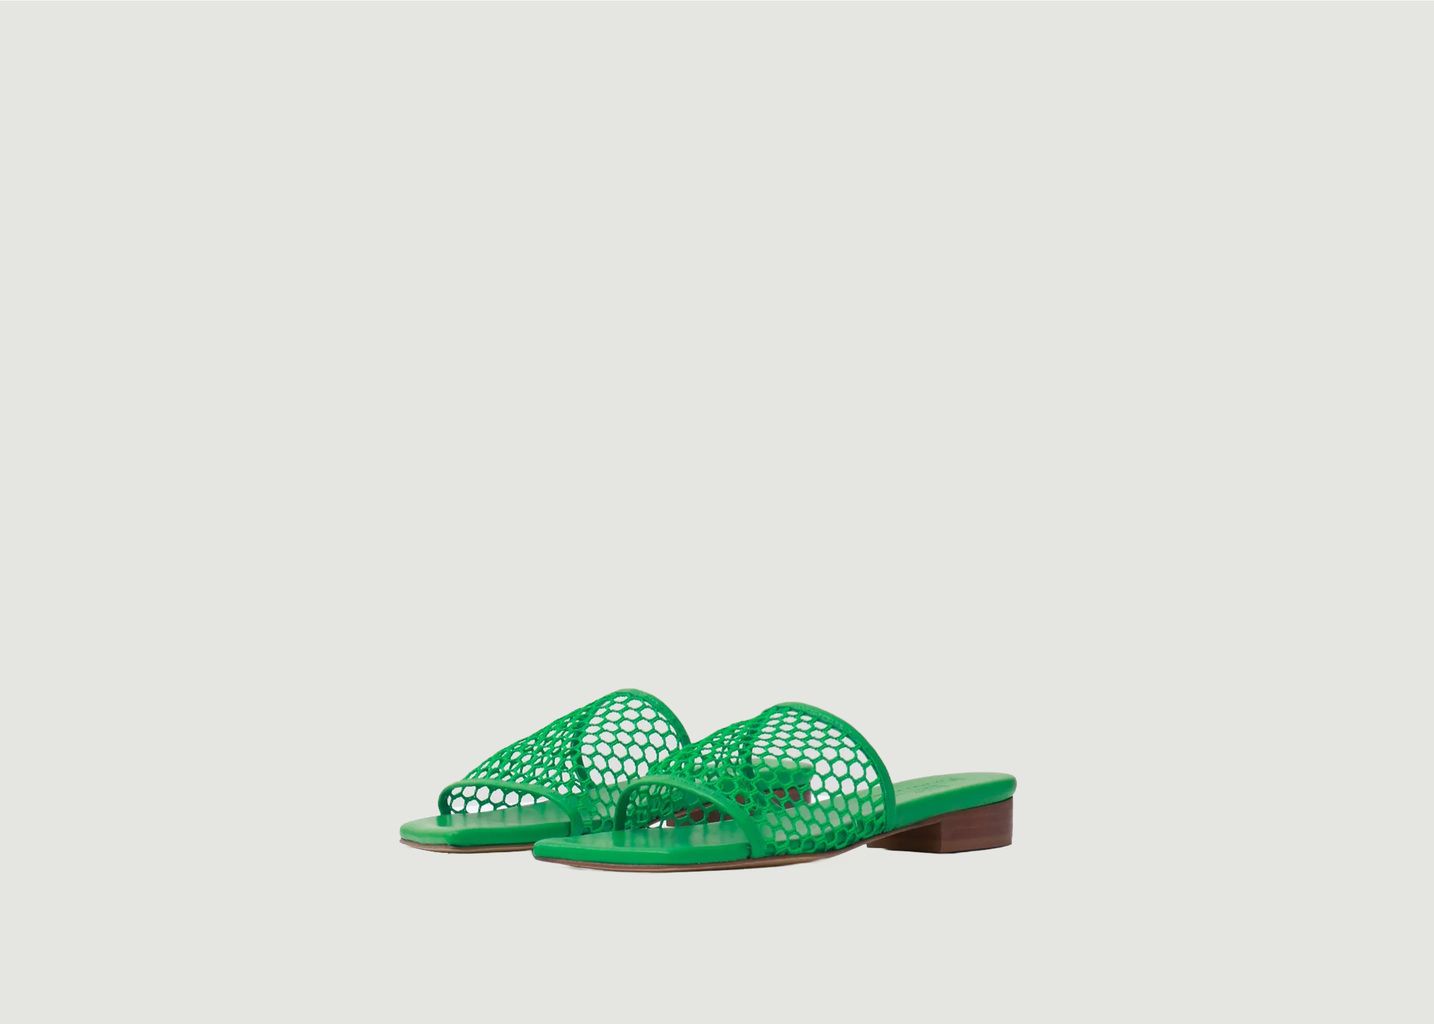 Chica mesh sandals - Souliers Martinez